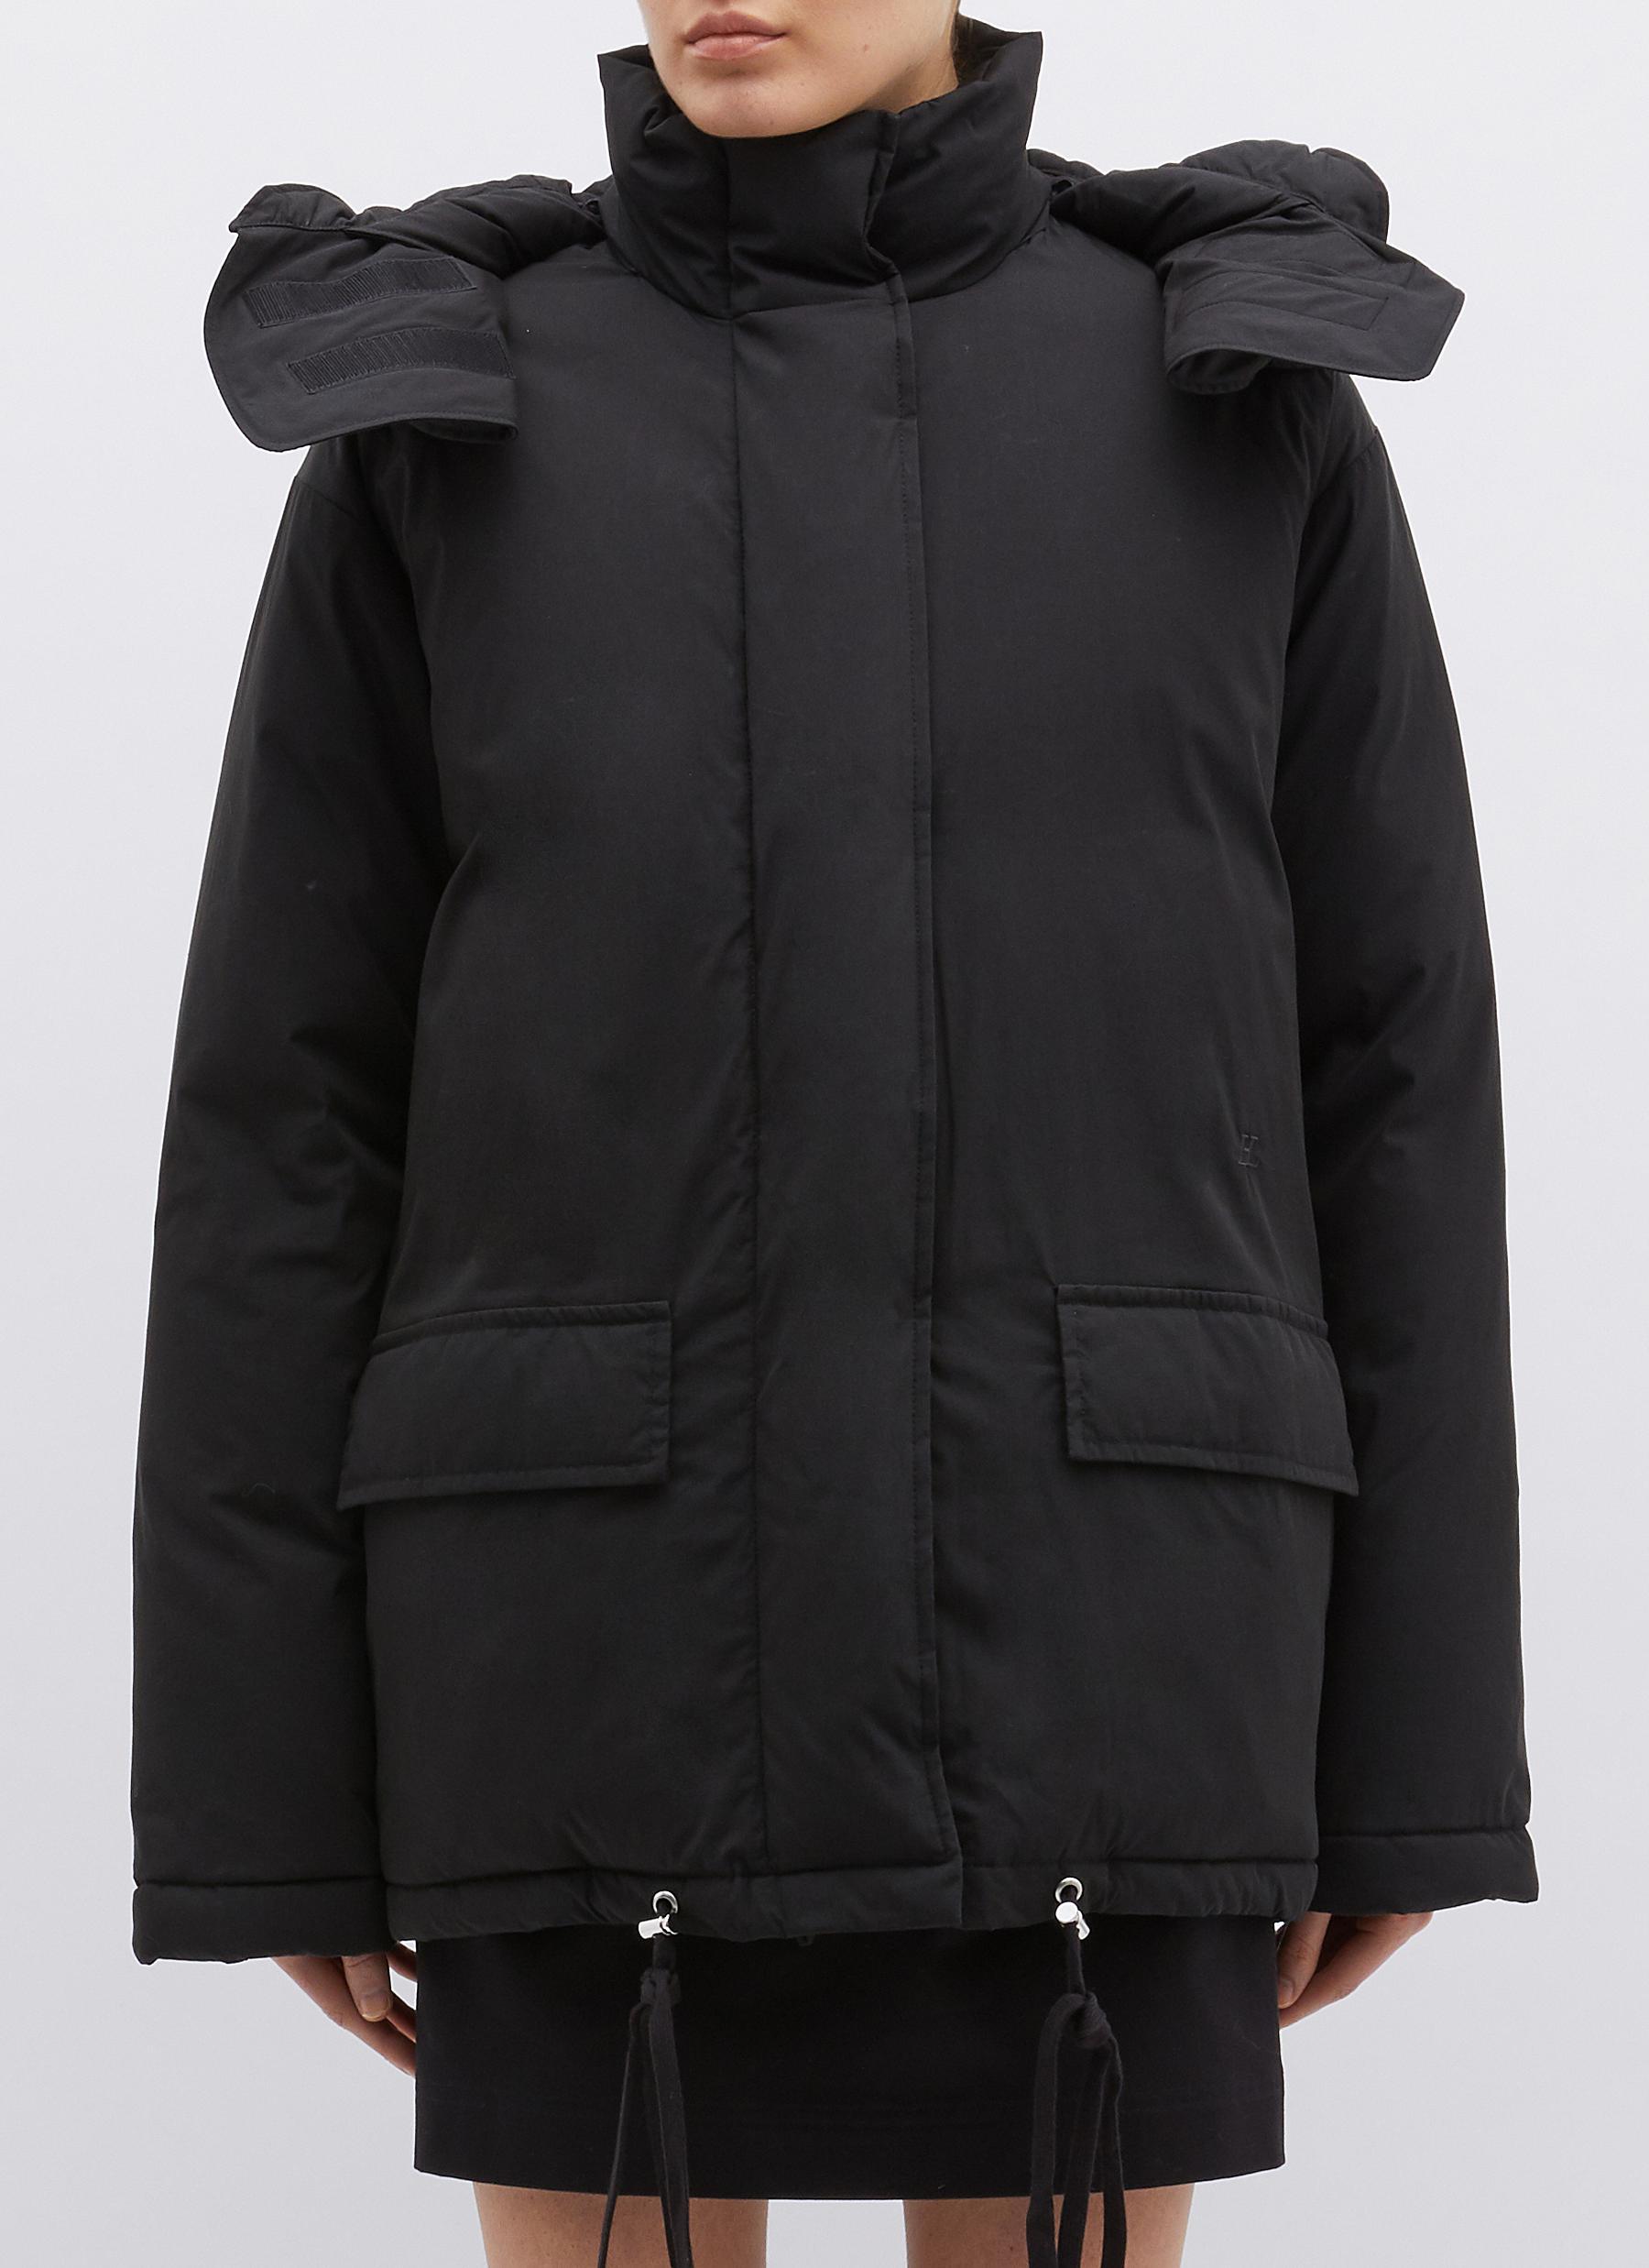 Helmut Lang Cotton Detachable Hood Down Puffer Jacket in Black - Lyst